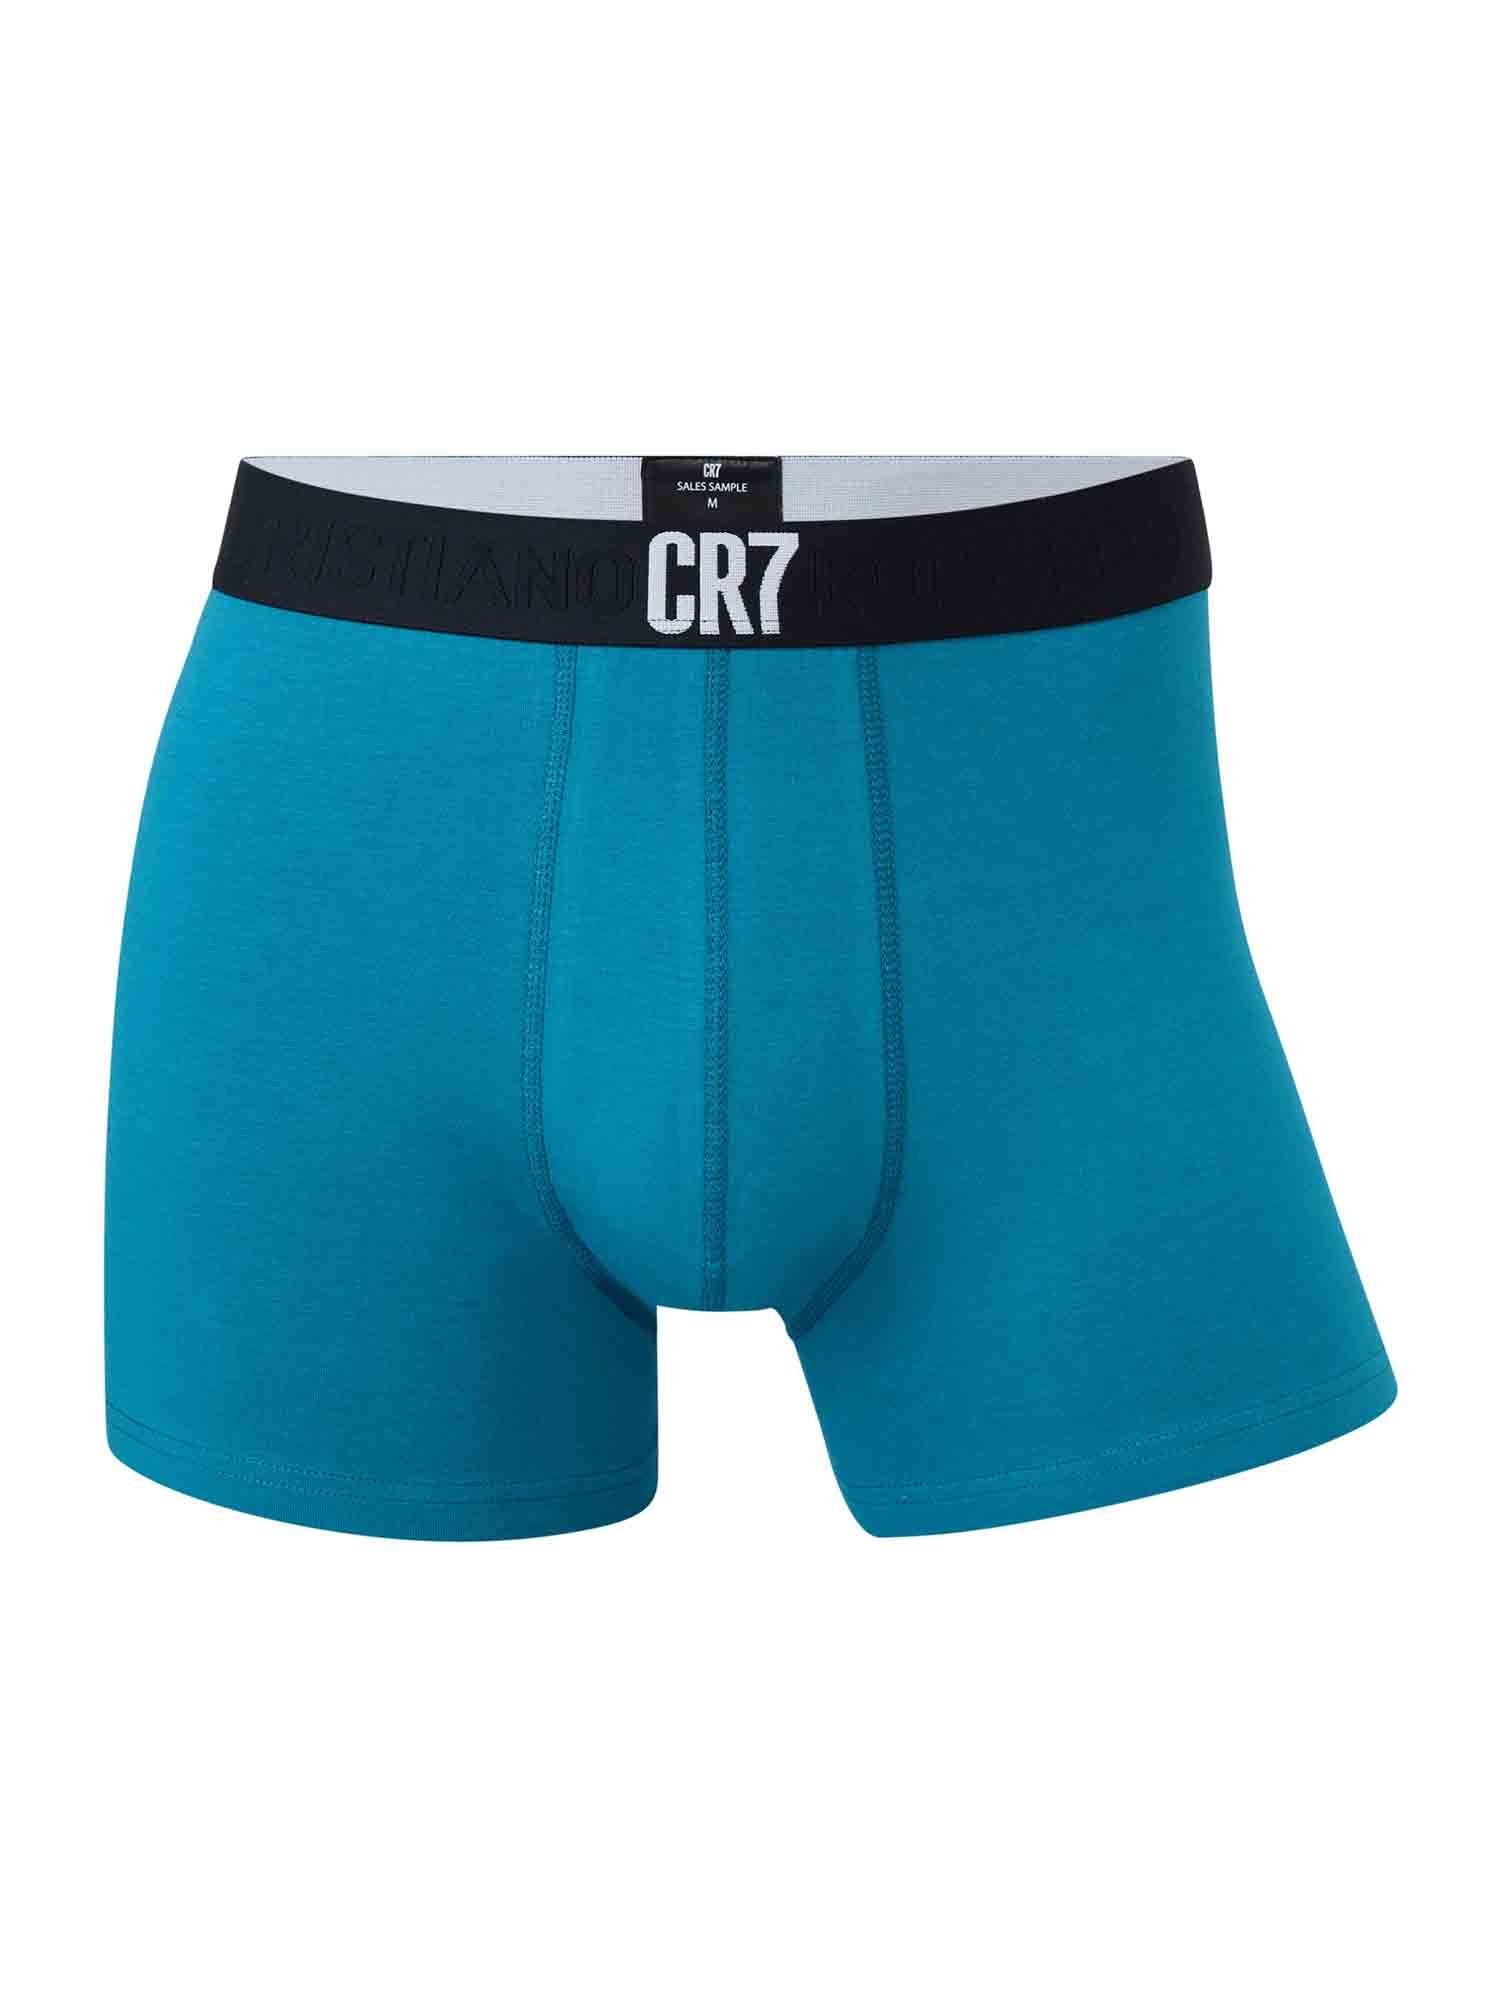 34 Retro Multipack CR7 Trunks (5-St) Herren Pants Multi Männer Retro Boxershorts Pants